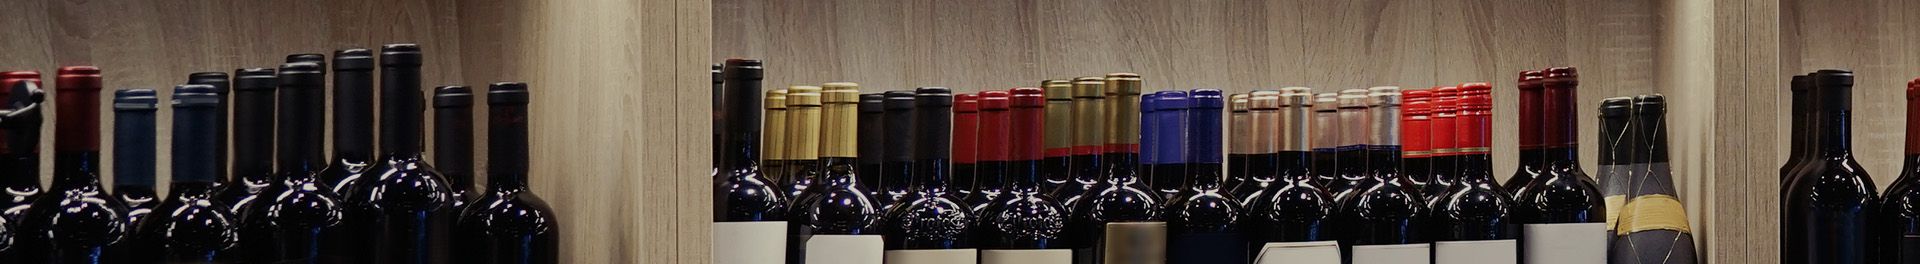 Assorted liquor bottles displayed on shelf.